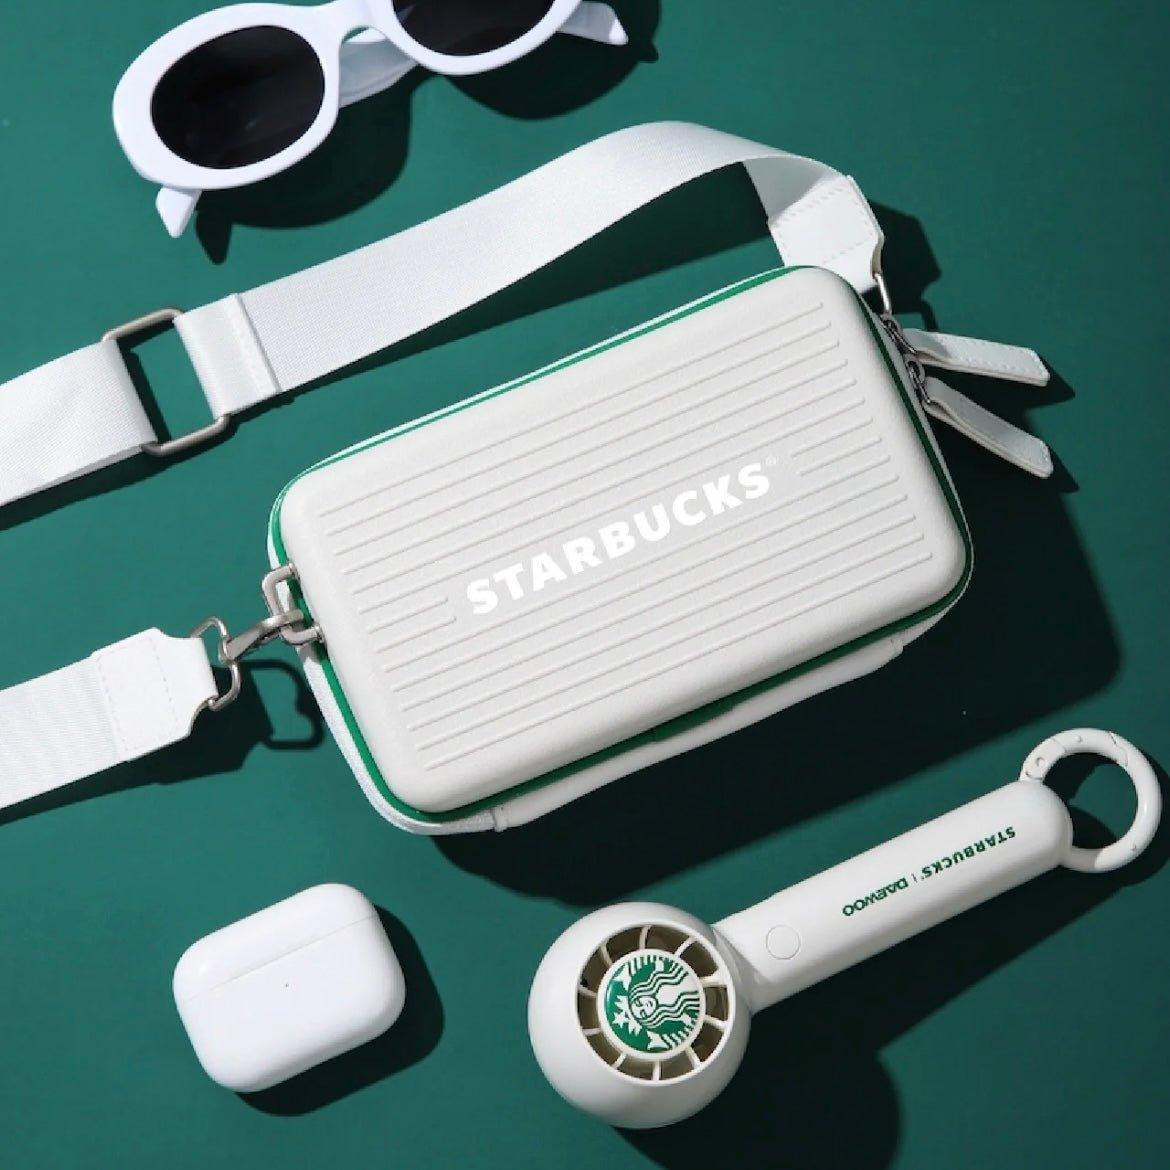 2023 China Starbucks Mini Suitcase - Ann Ann Starbucks